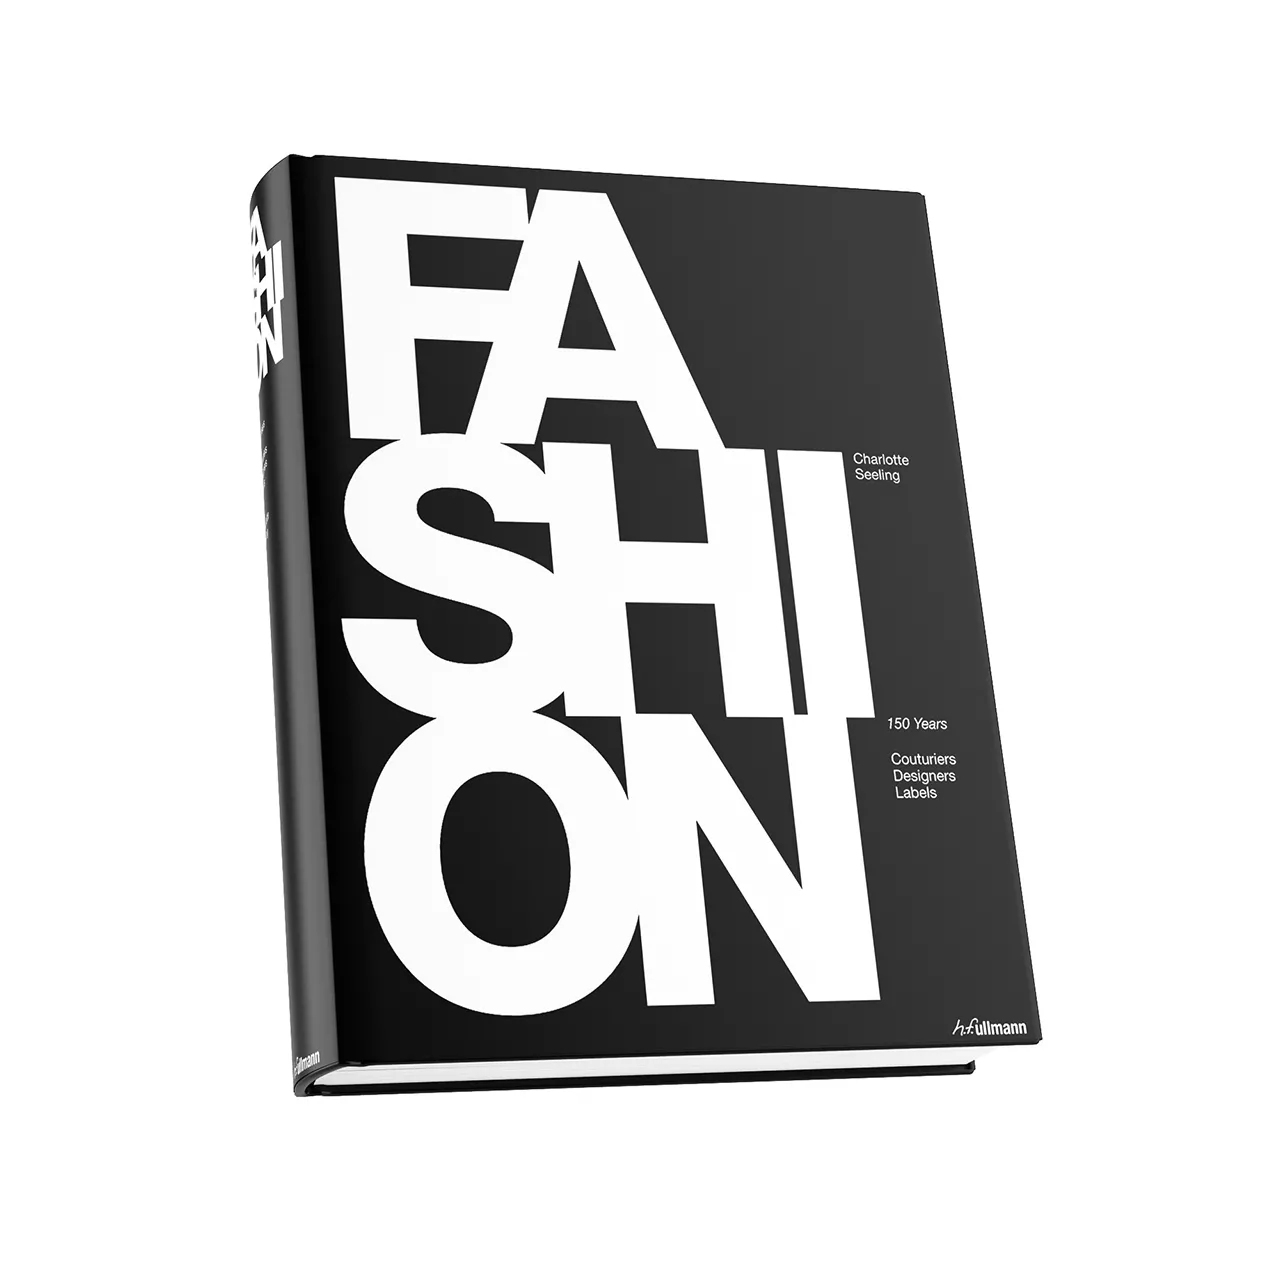 Accessories – fashion-book-by-hfullmann